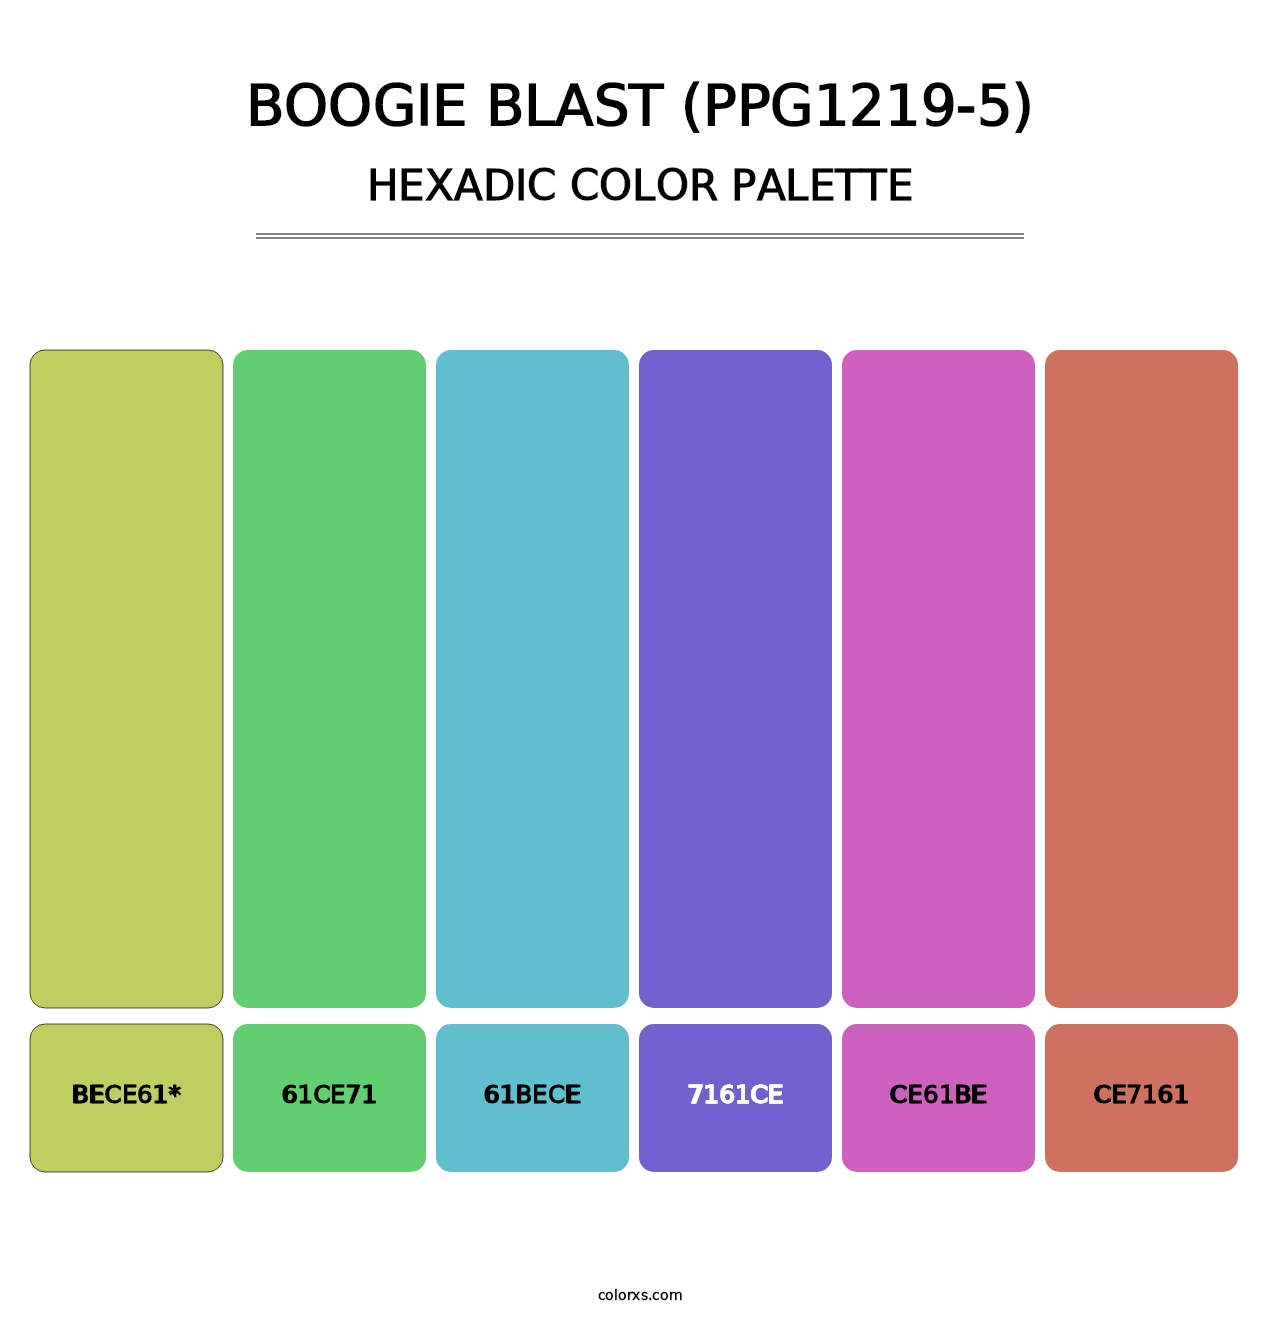 Boogie Blast (PPG1219-5) - Hexadic Color Palette